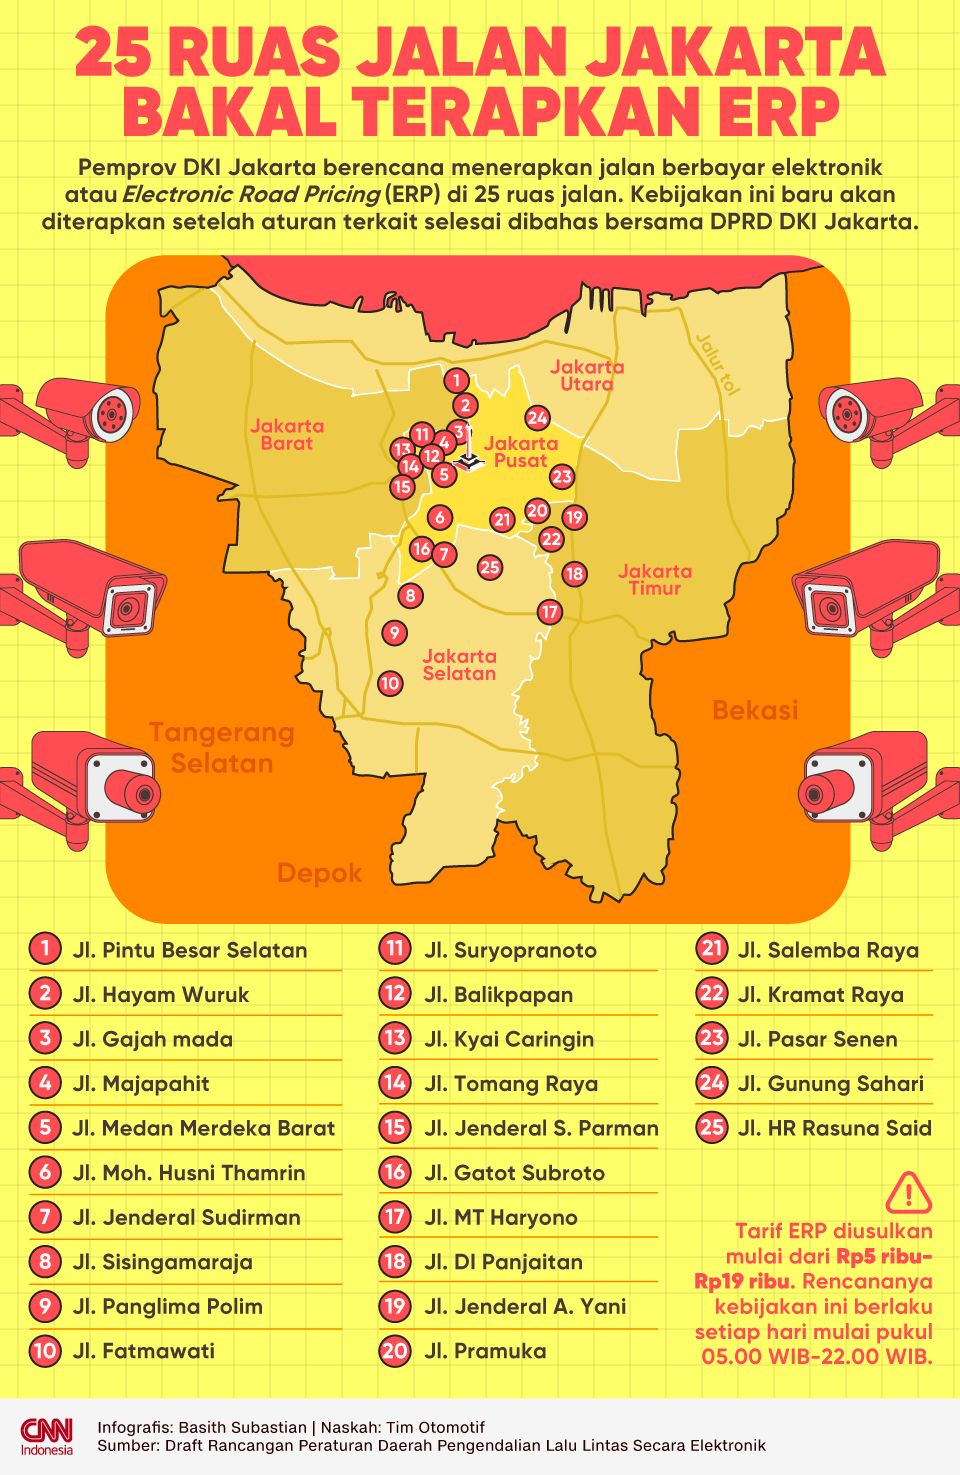 Infografis 25 Ruas Jalan Jakarta Bakal Terapkan ERP